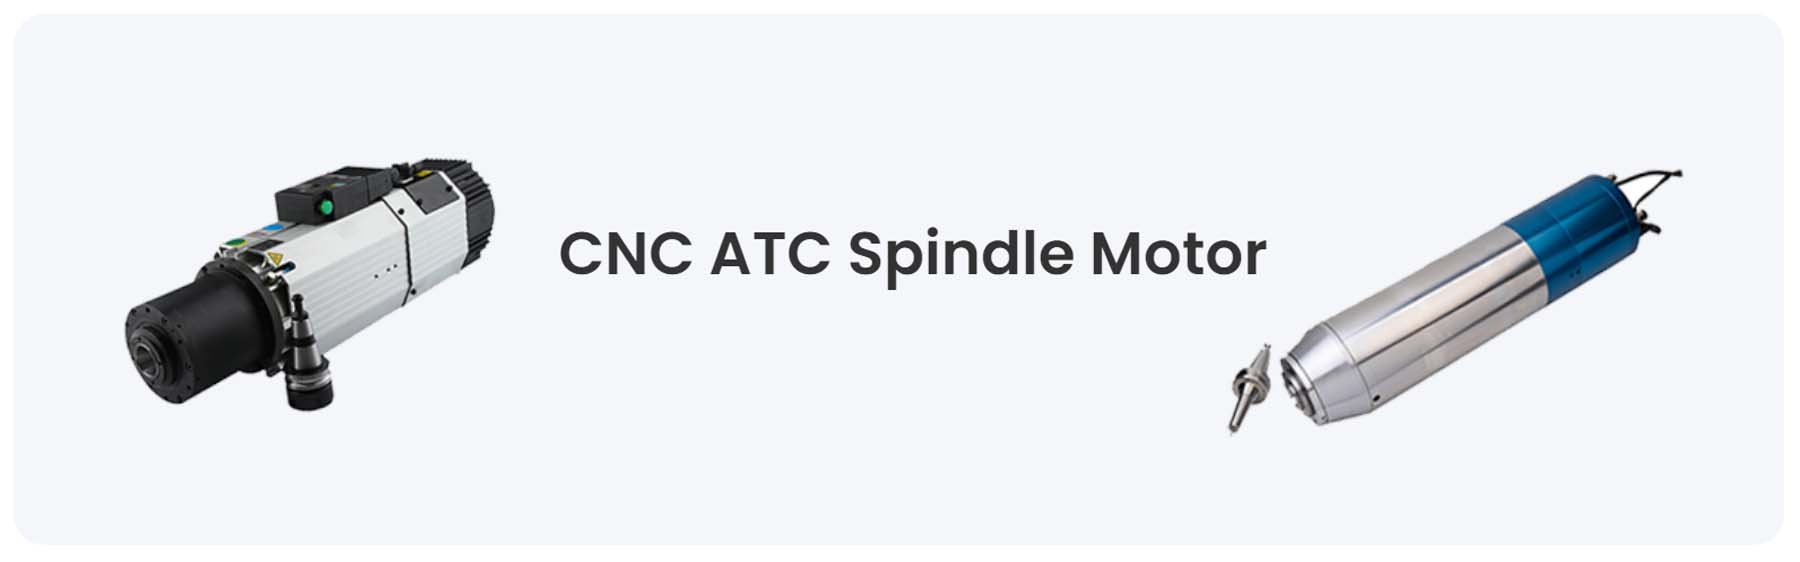 CNC ATC 스핀들 모터 - HOLRY Motor.jpg